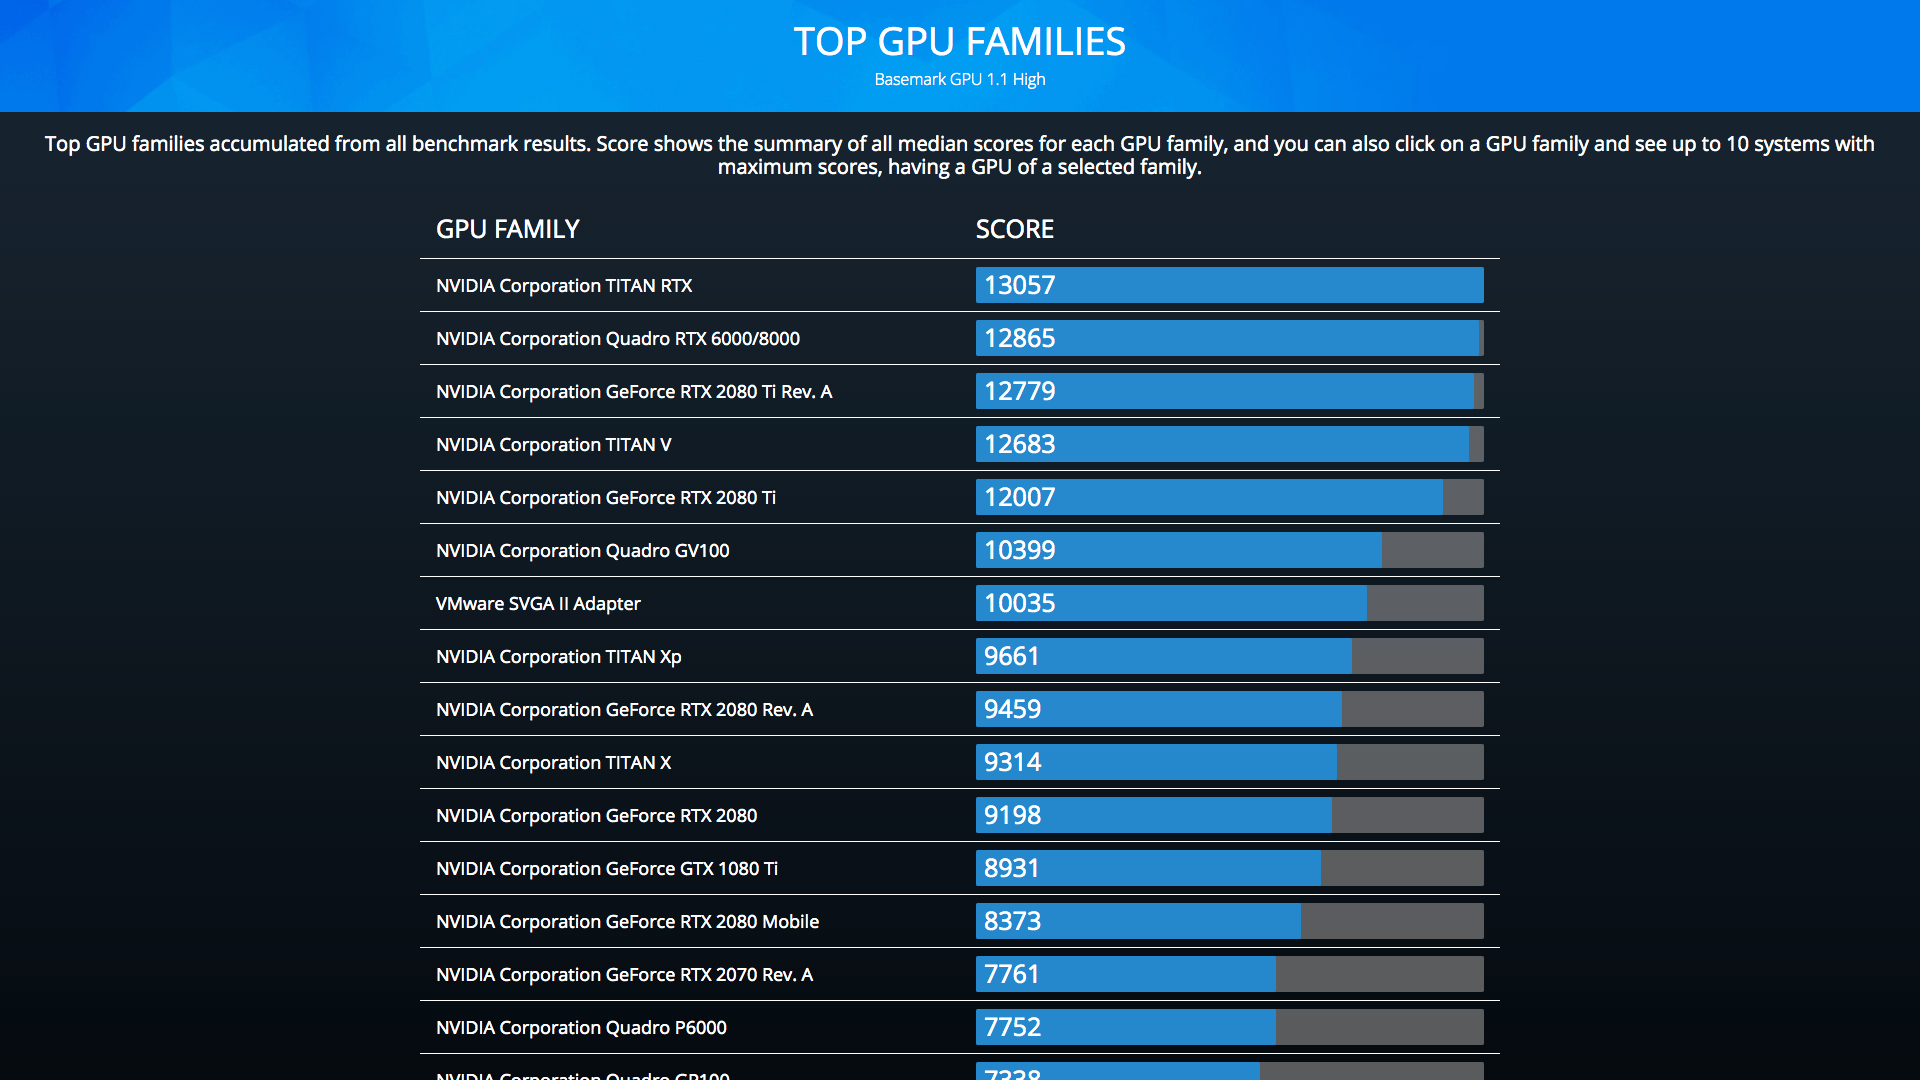 Basemark GPU Benchmark 1.2.1 Tested On 12 Graphics Cards - Legit Reviews